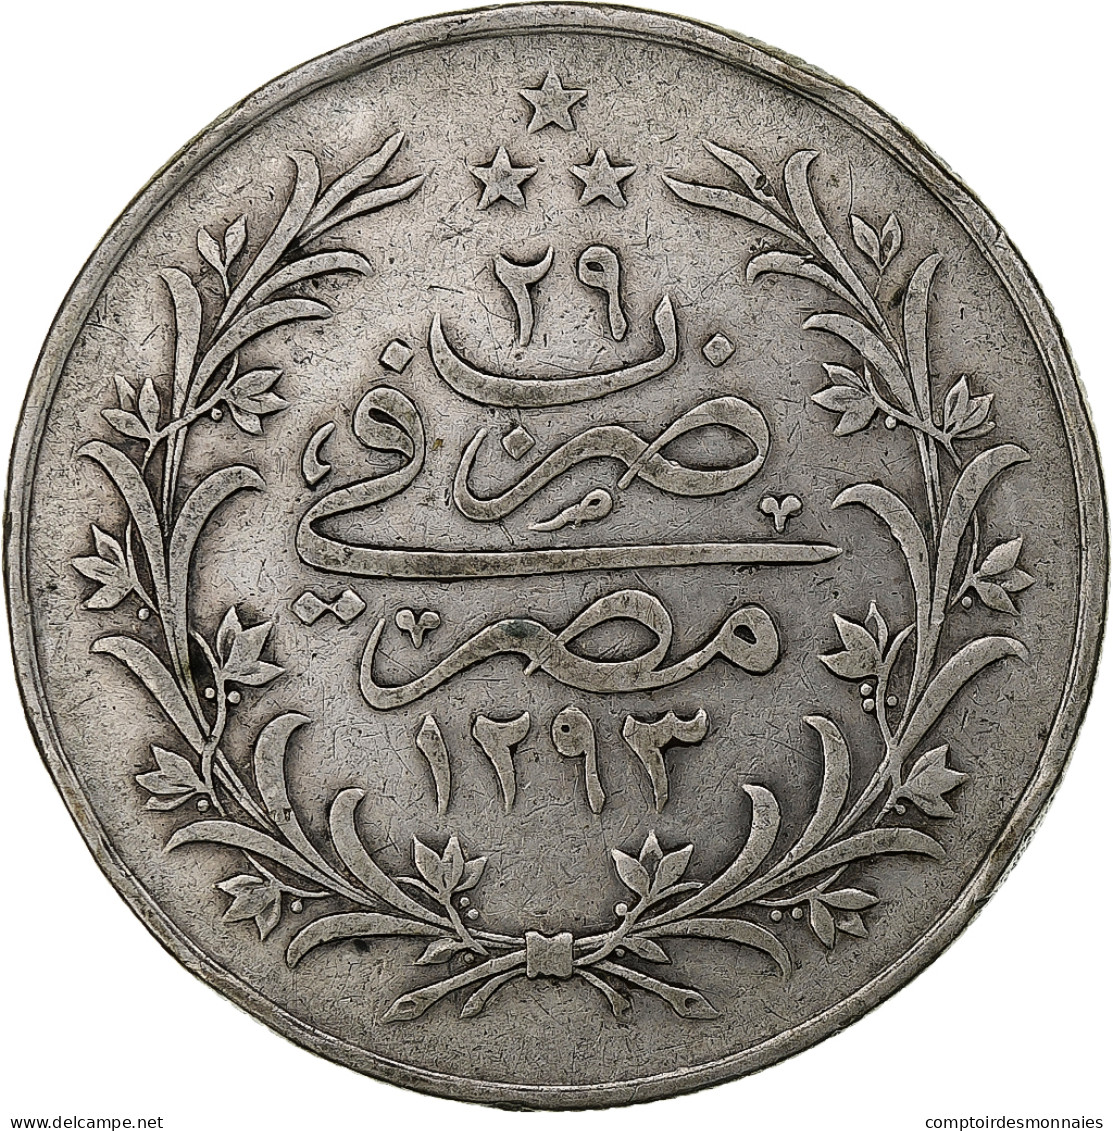 Égypte, Abdul Hamid II, 10 Qirsh, 1884/AH1293, Berlin, Argent, TTB, KM:295 - Aegypten